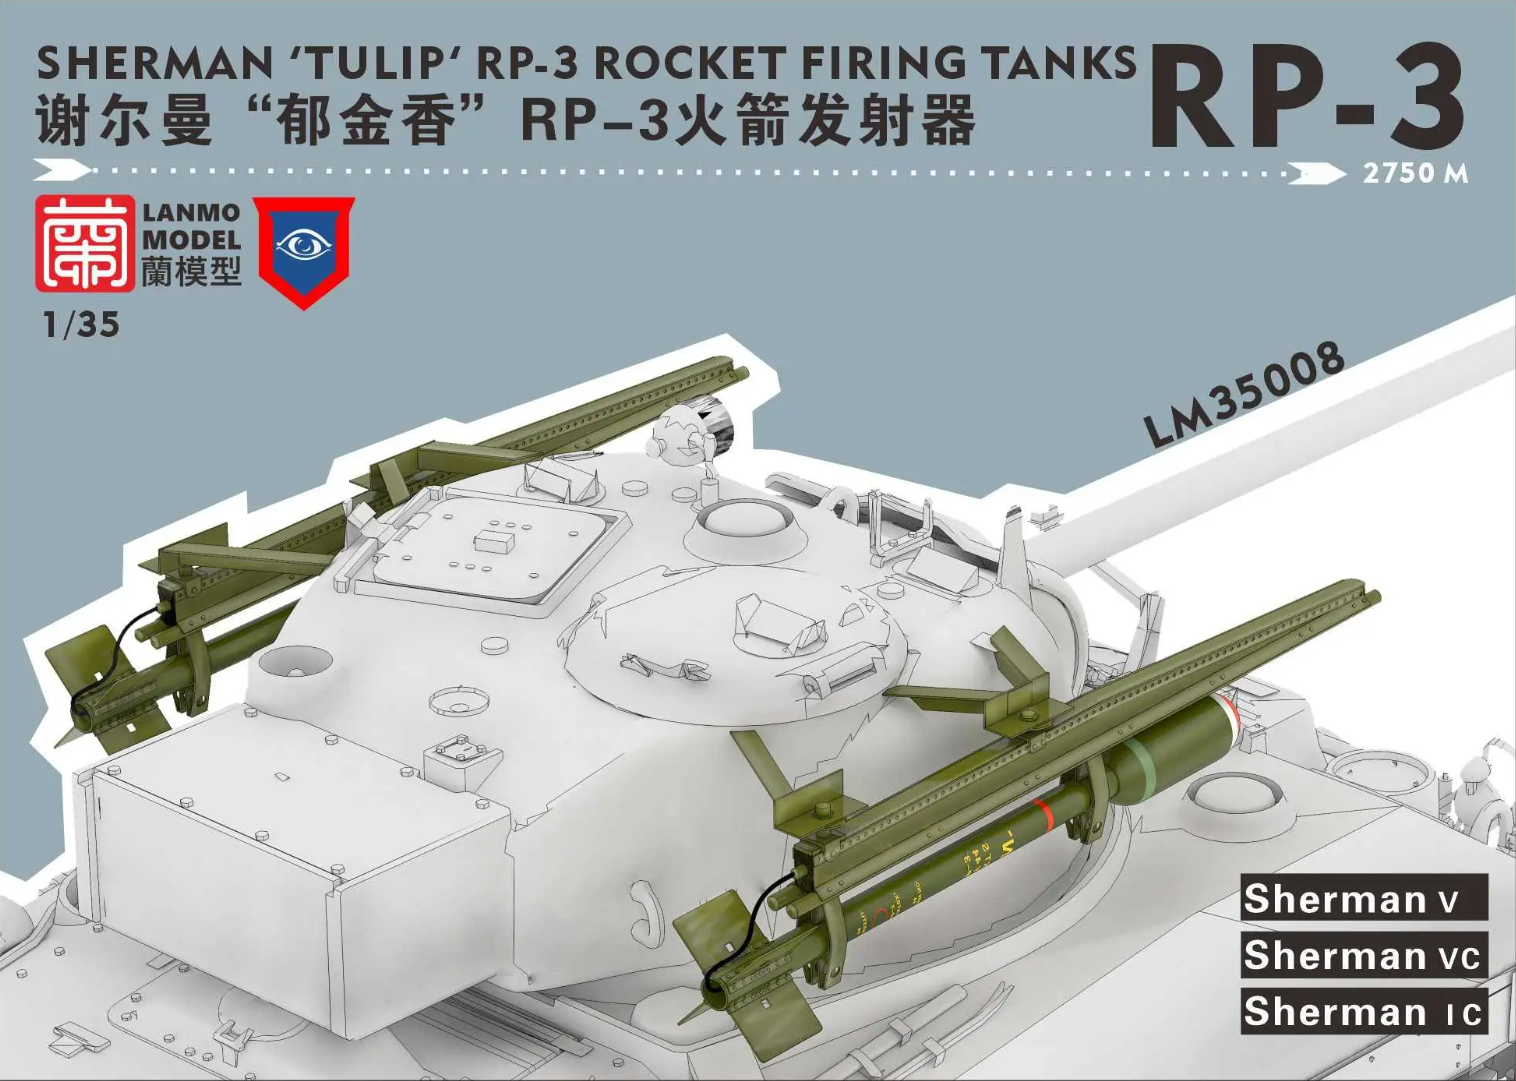 LM-35008  дополнения из металла  Sherman "Tulip" RP-3 rocket firing tanks  (1:35)